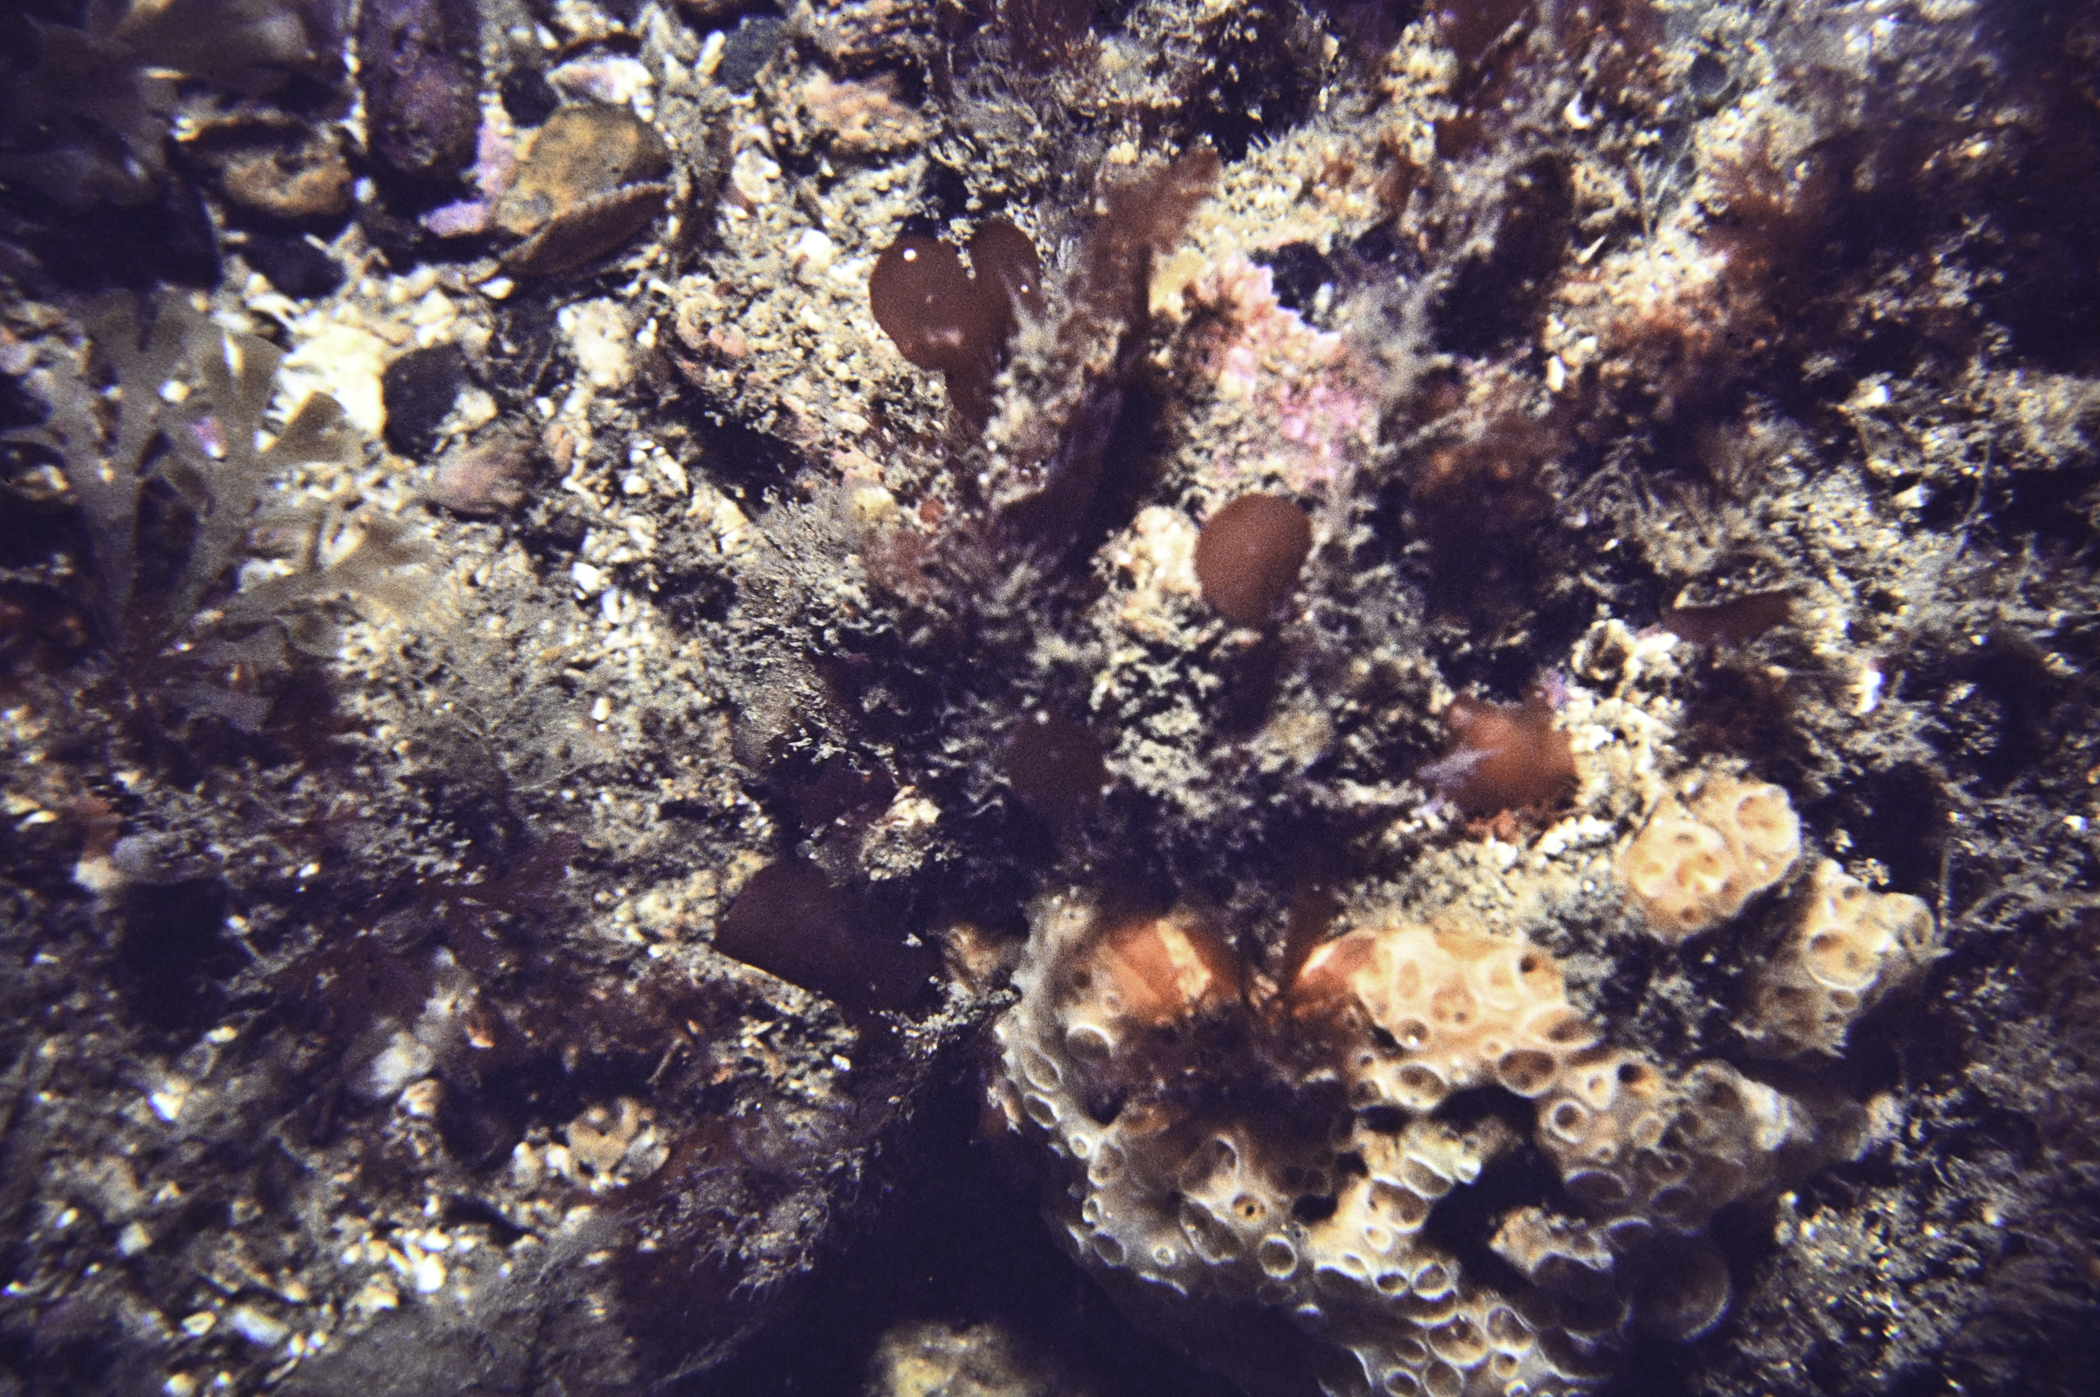 Hemimycale columella. Site: Church Bay, Rathlin Island. 